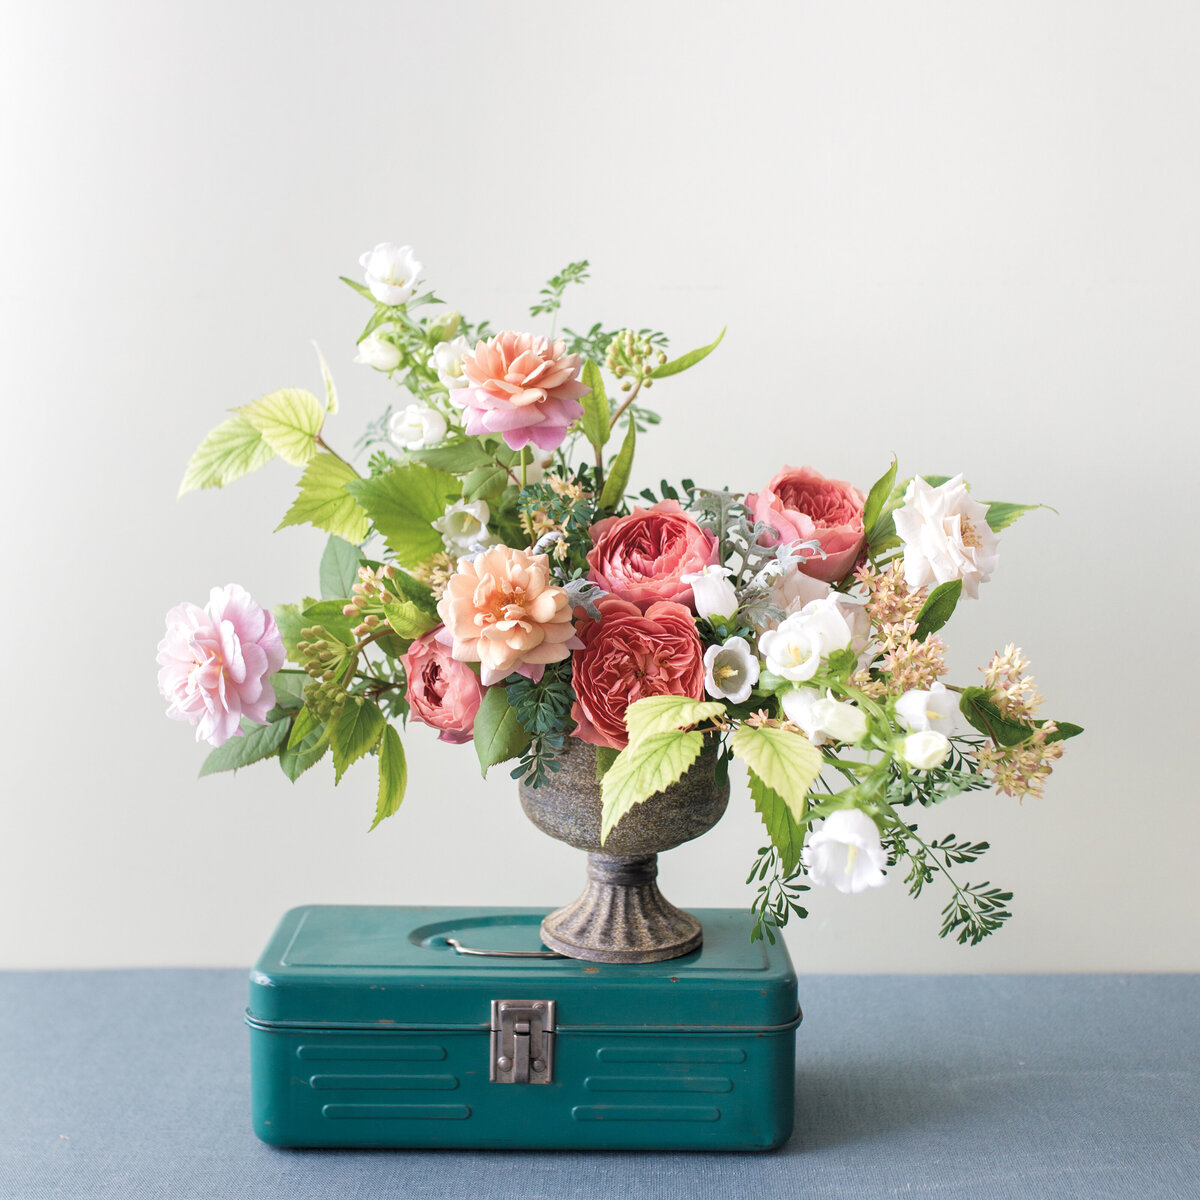 Atelier-Carmel-Wedding-Florist-GALLERY-Arrangements-23